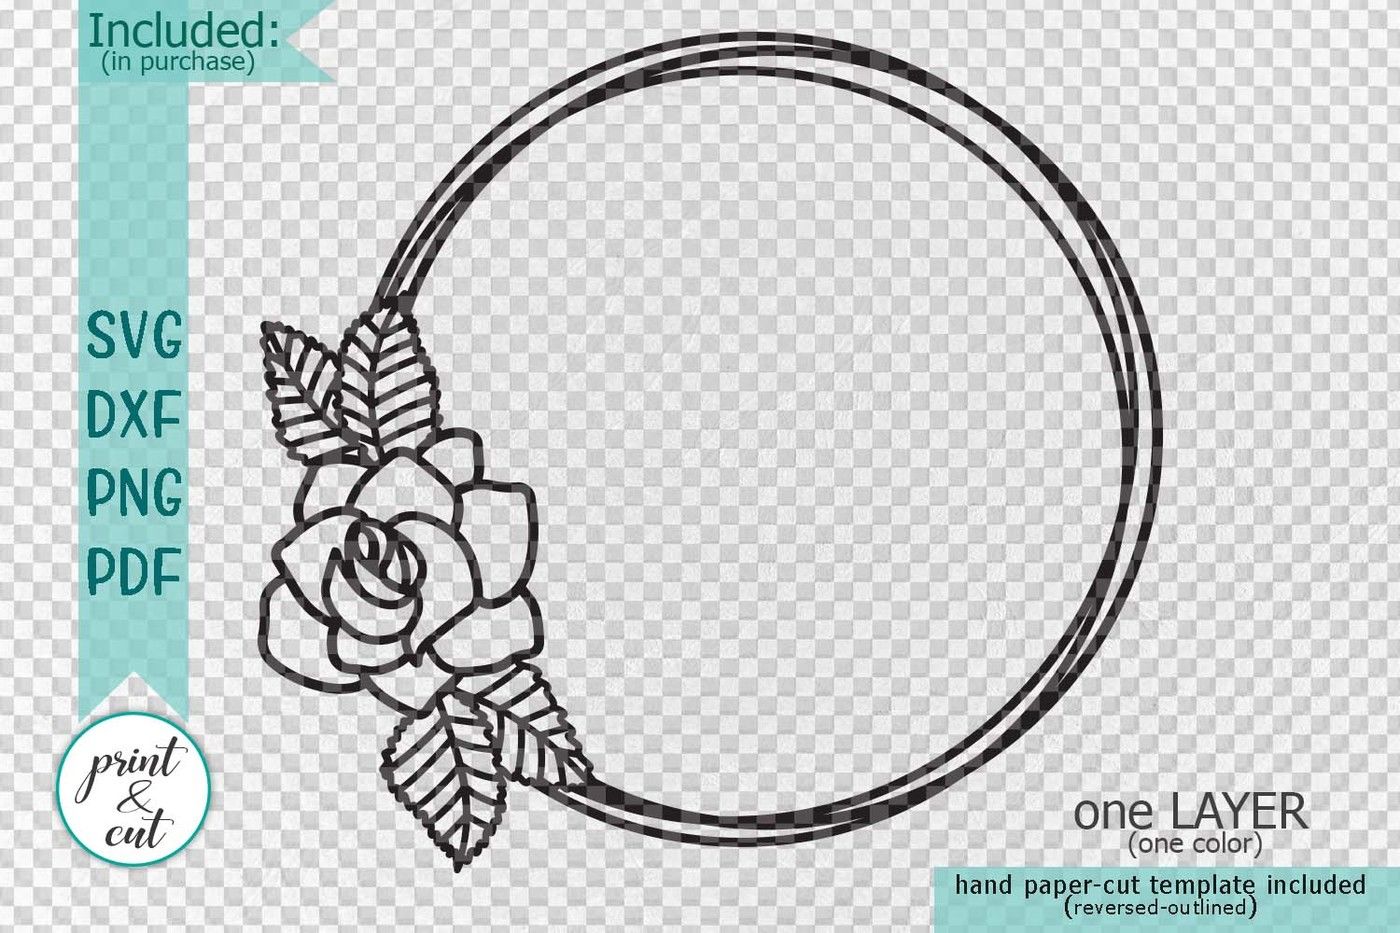 Rose Monogram Frame SVG, Floral Wreath SVG, Leaves Cut File For Cricut,  Silhouette, Flower Circle Frame, Monogram Wreath Clipart